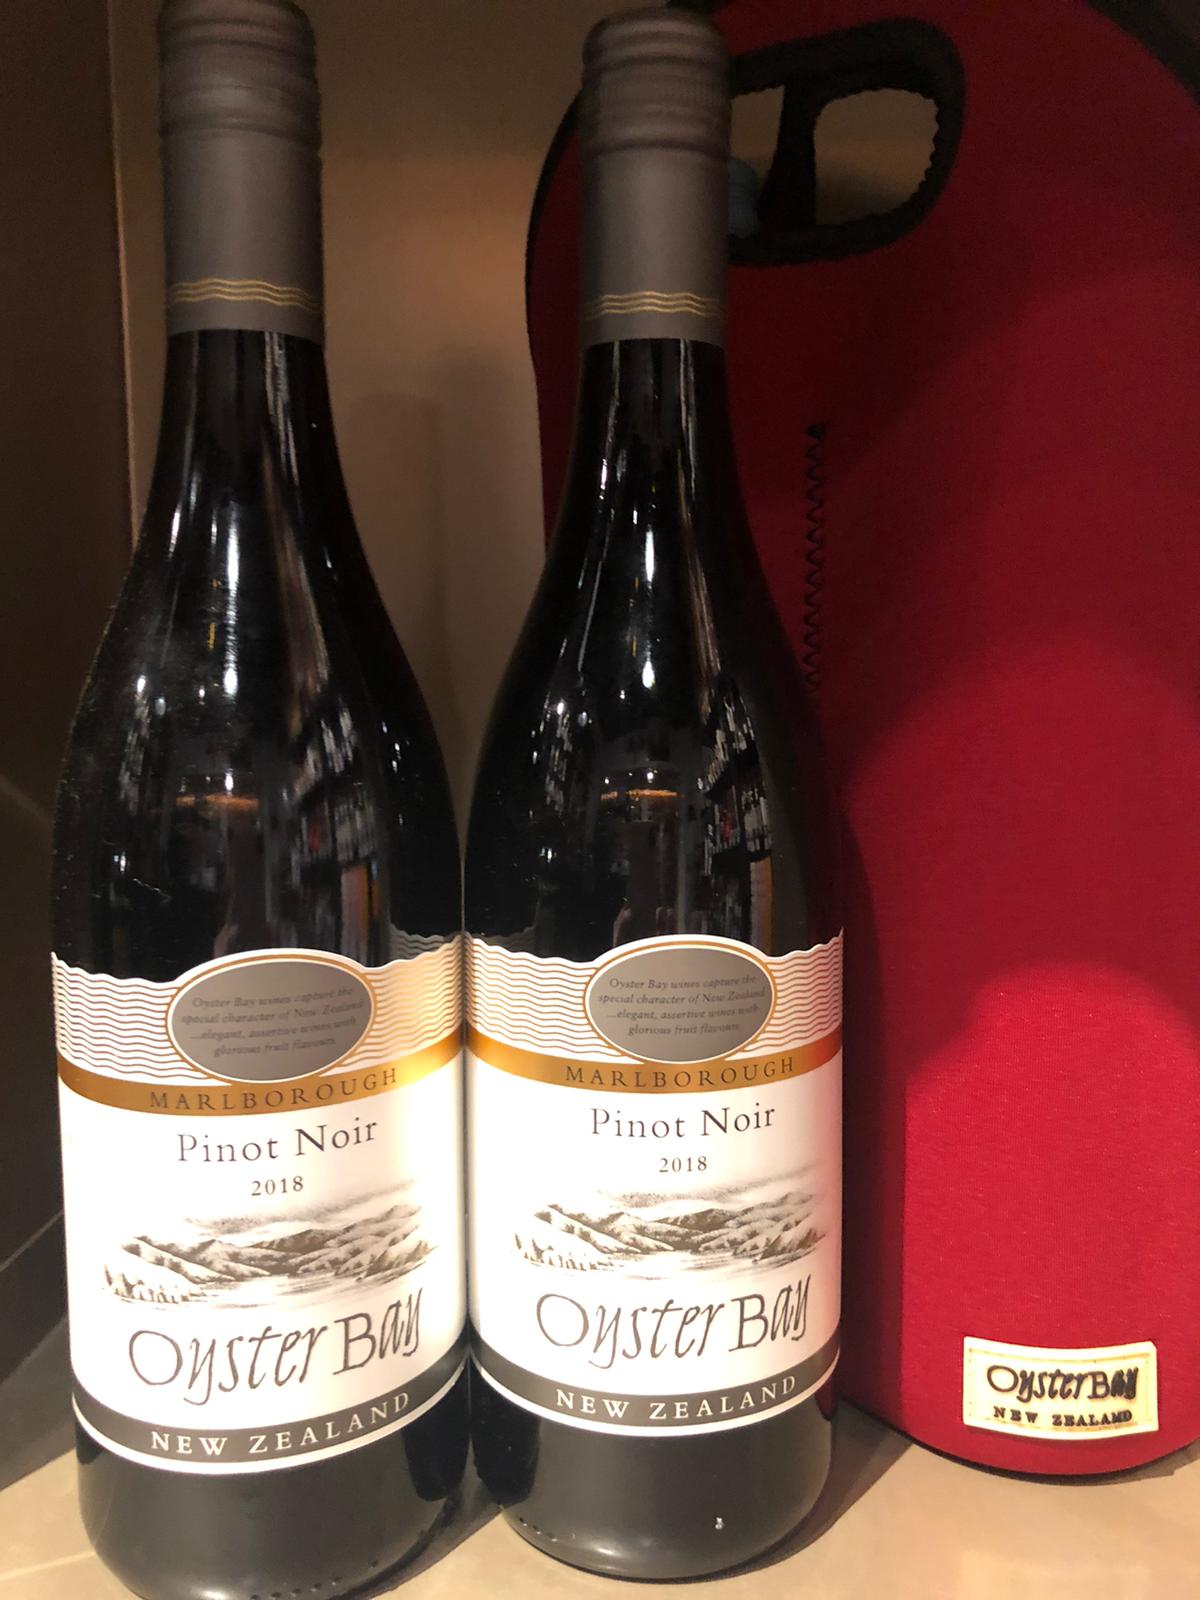 Oyster Bay Marlborough Pinot Noir 2018